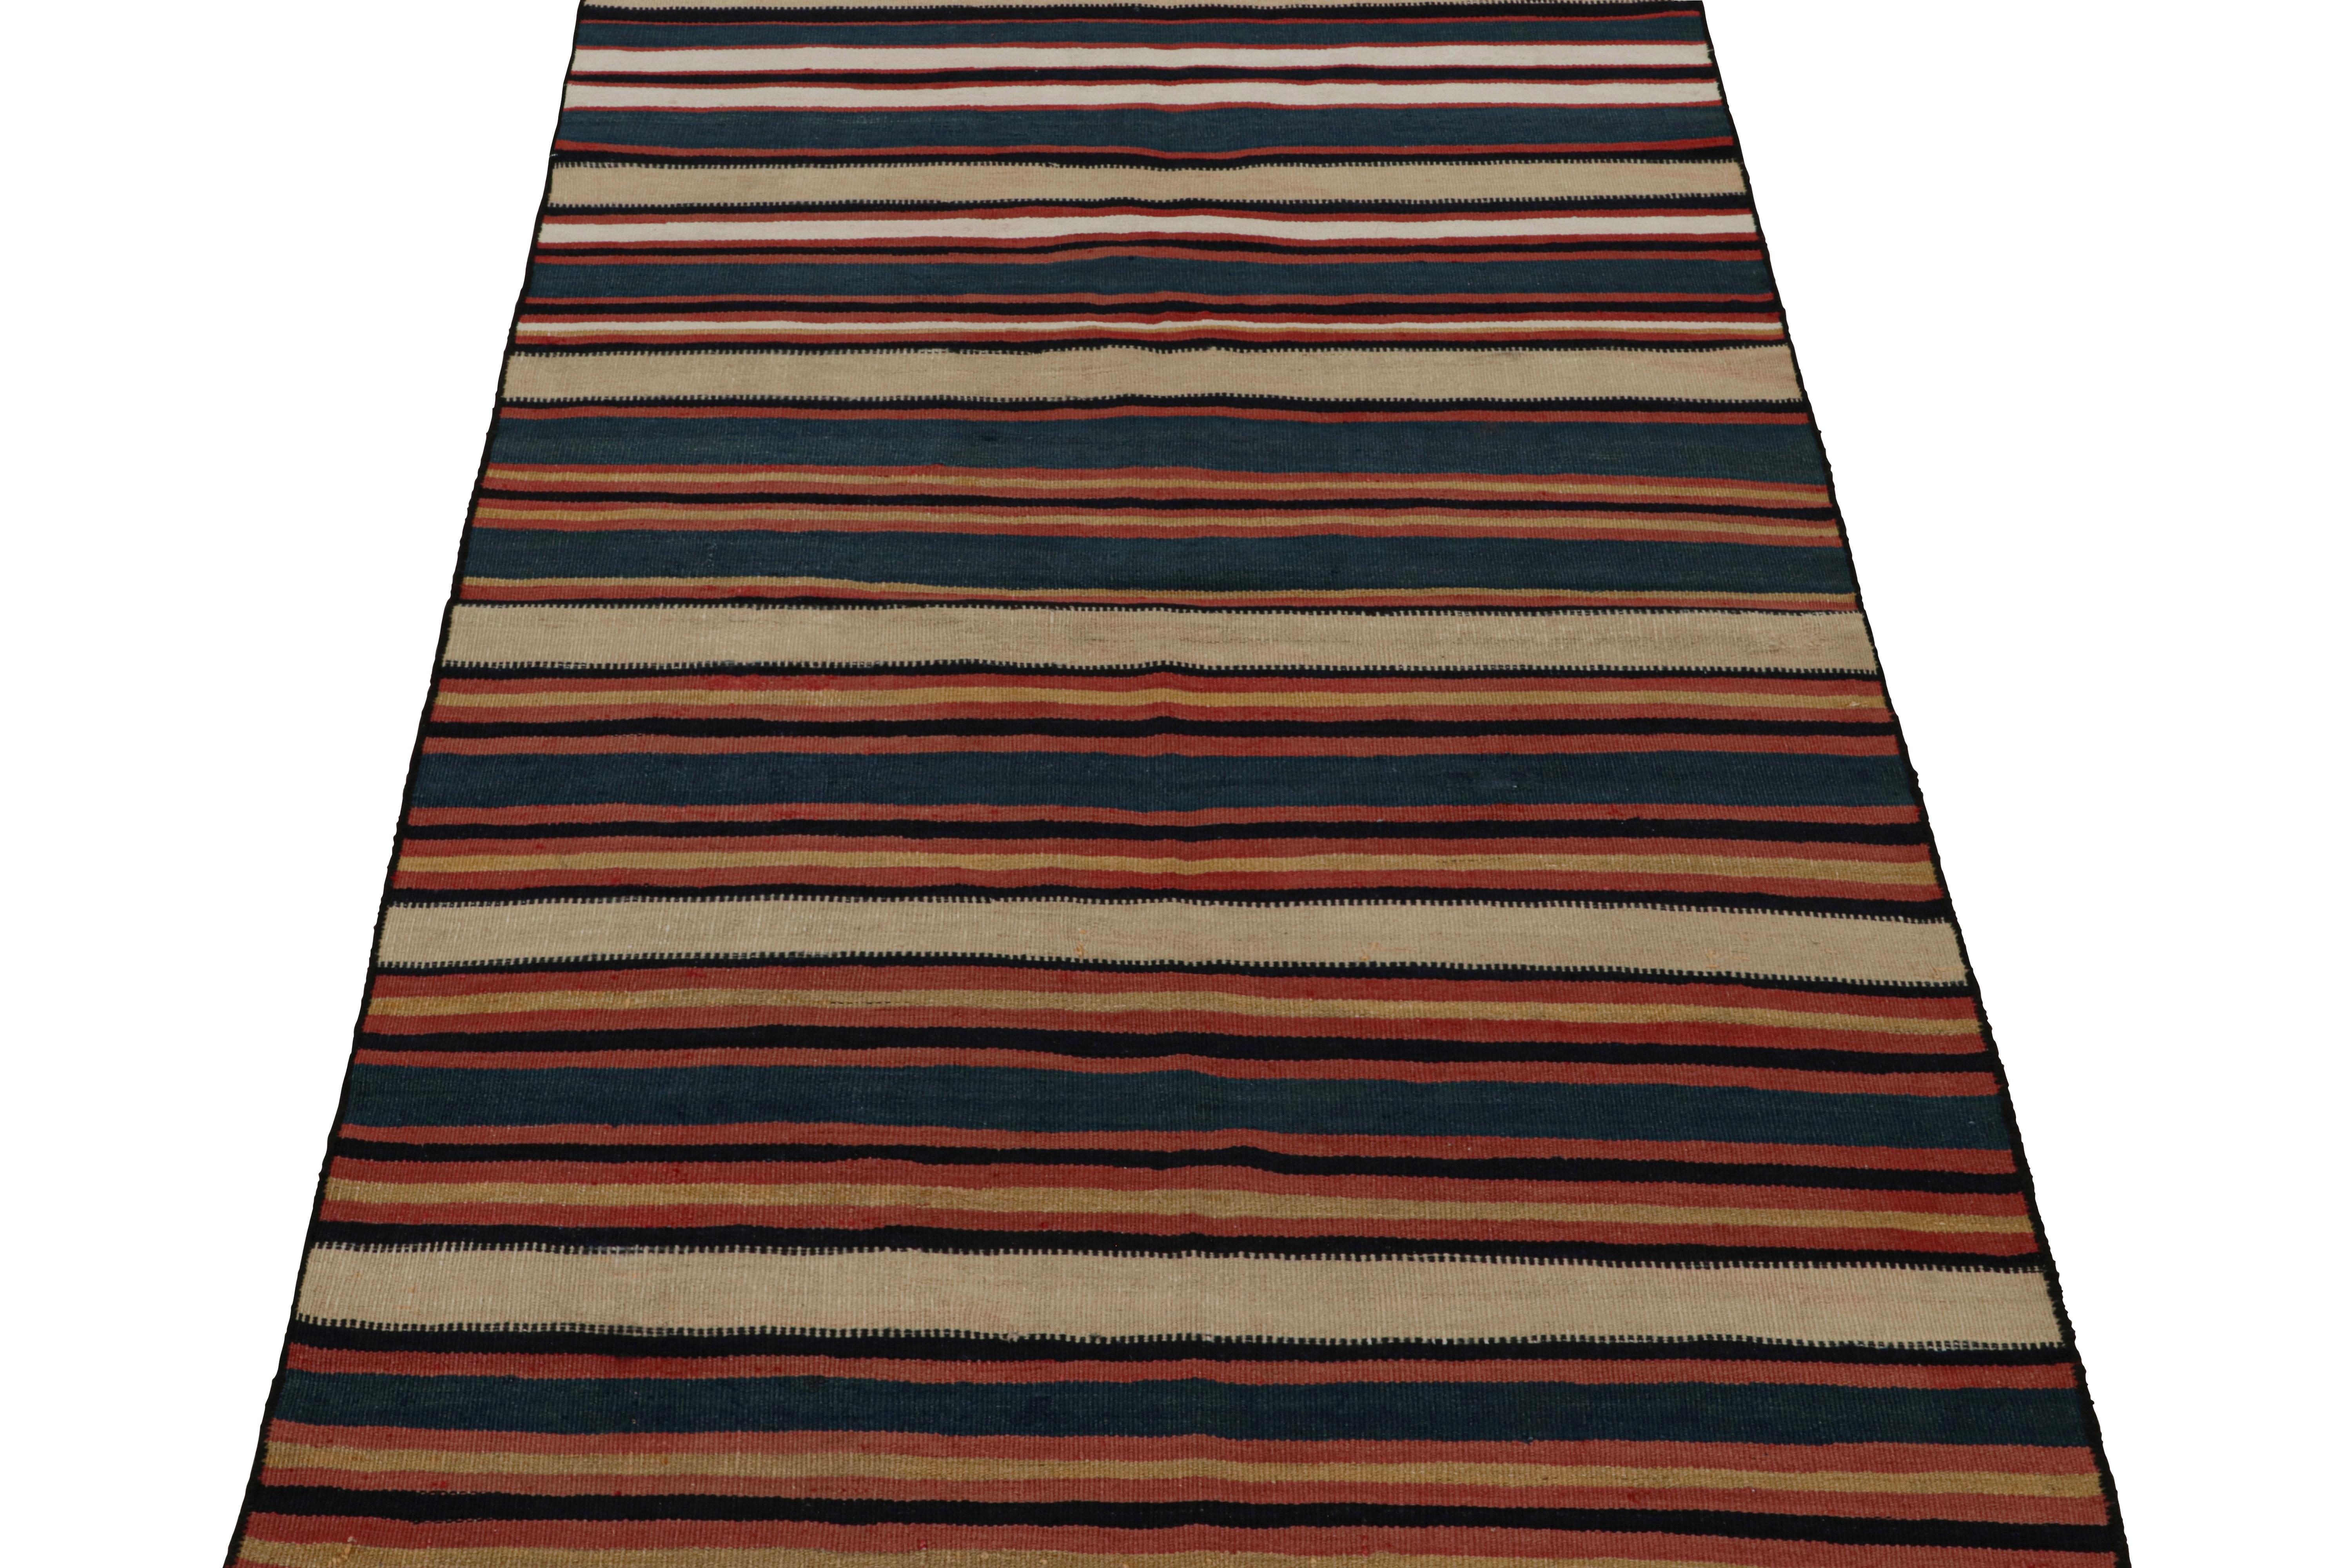 Tribal Vintage Afghani tribal Kilim runner rug, with Stripes, from Rug & Kilim For Sale